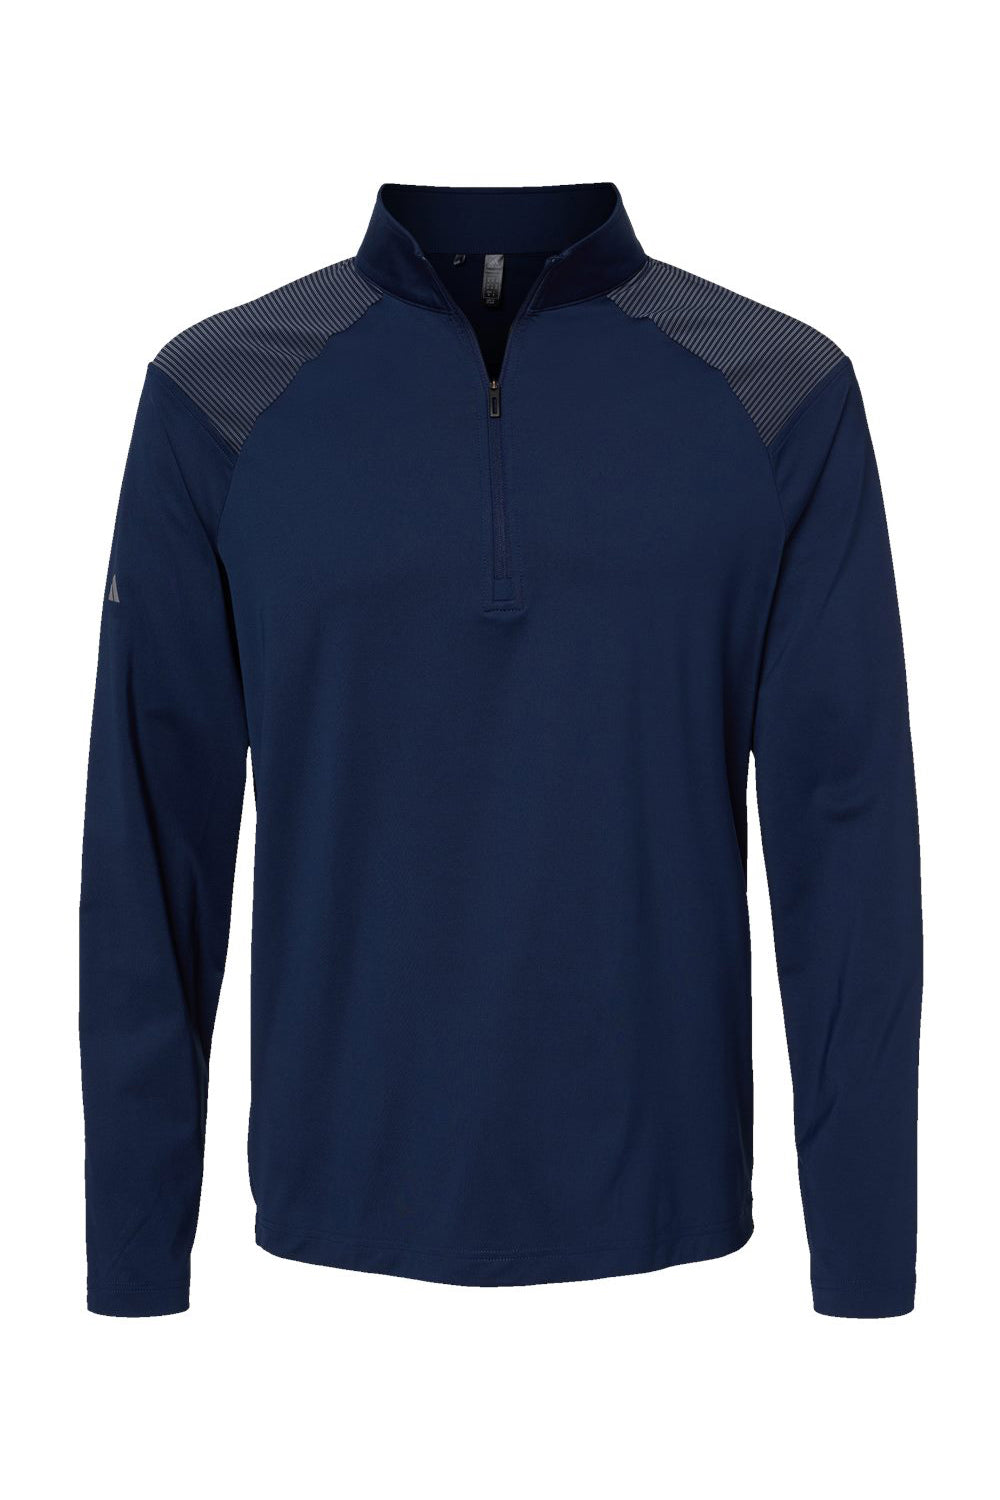 Adidas A520 Mens Shoulder Stripe Moisture Wicking 1/4 Zip Sweatshirt Team Navy Blue Flat Front